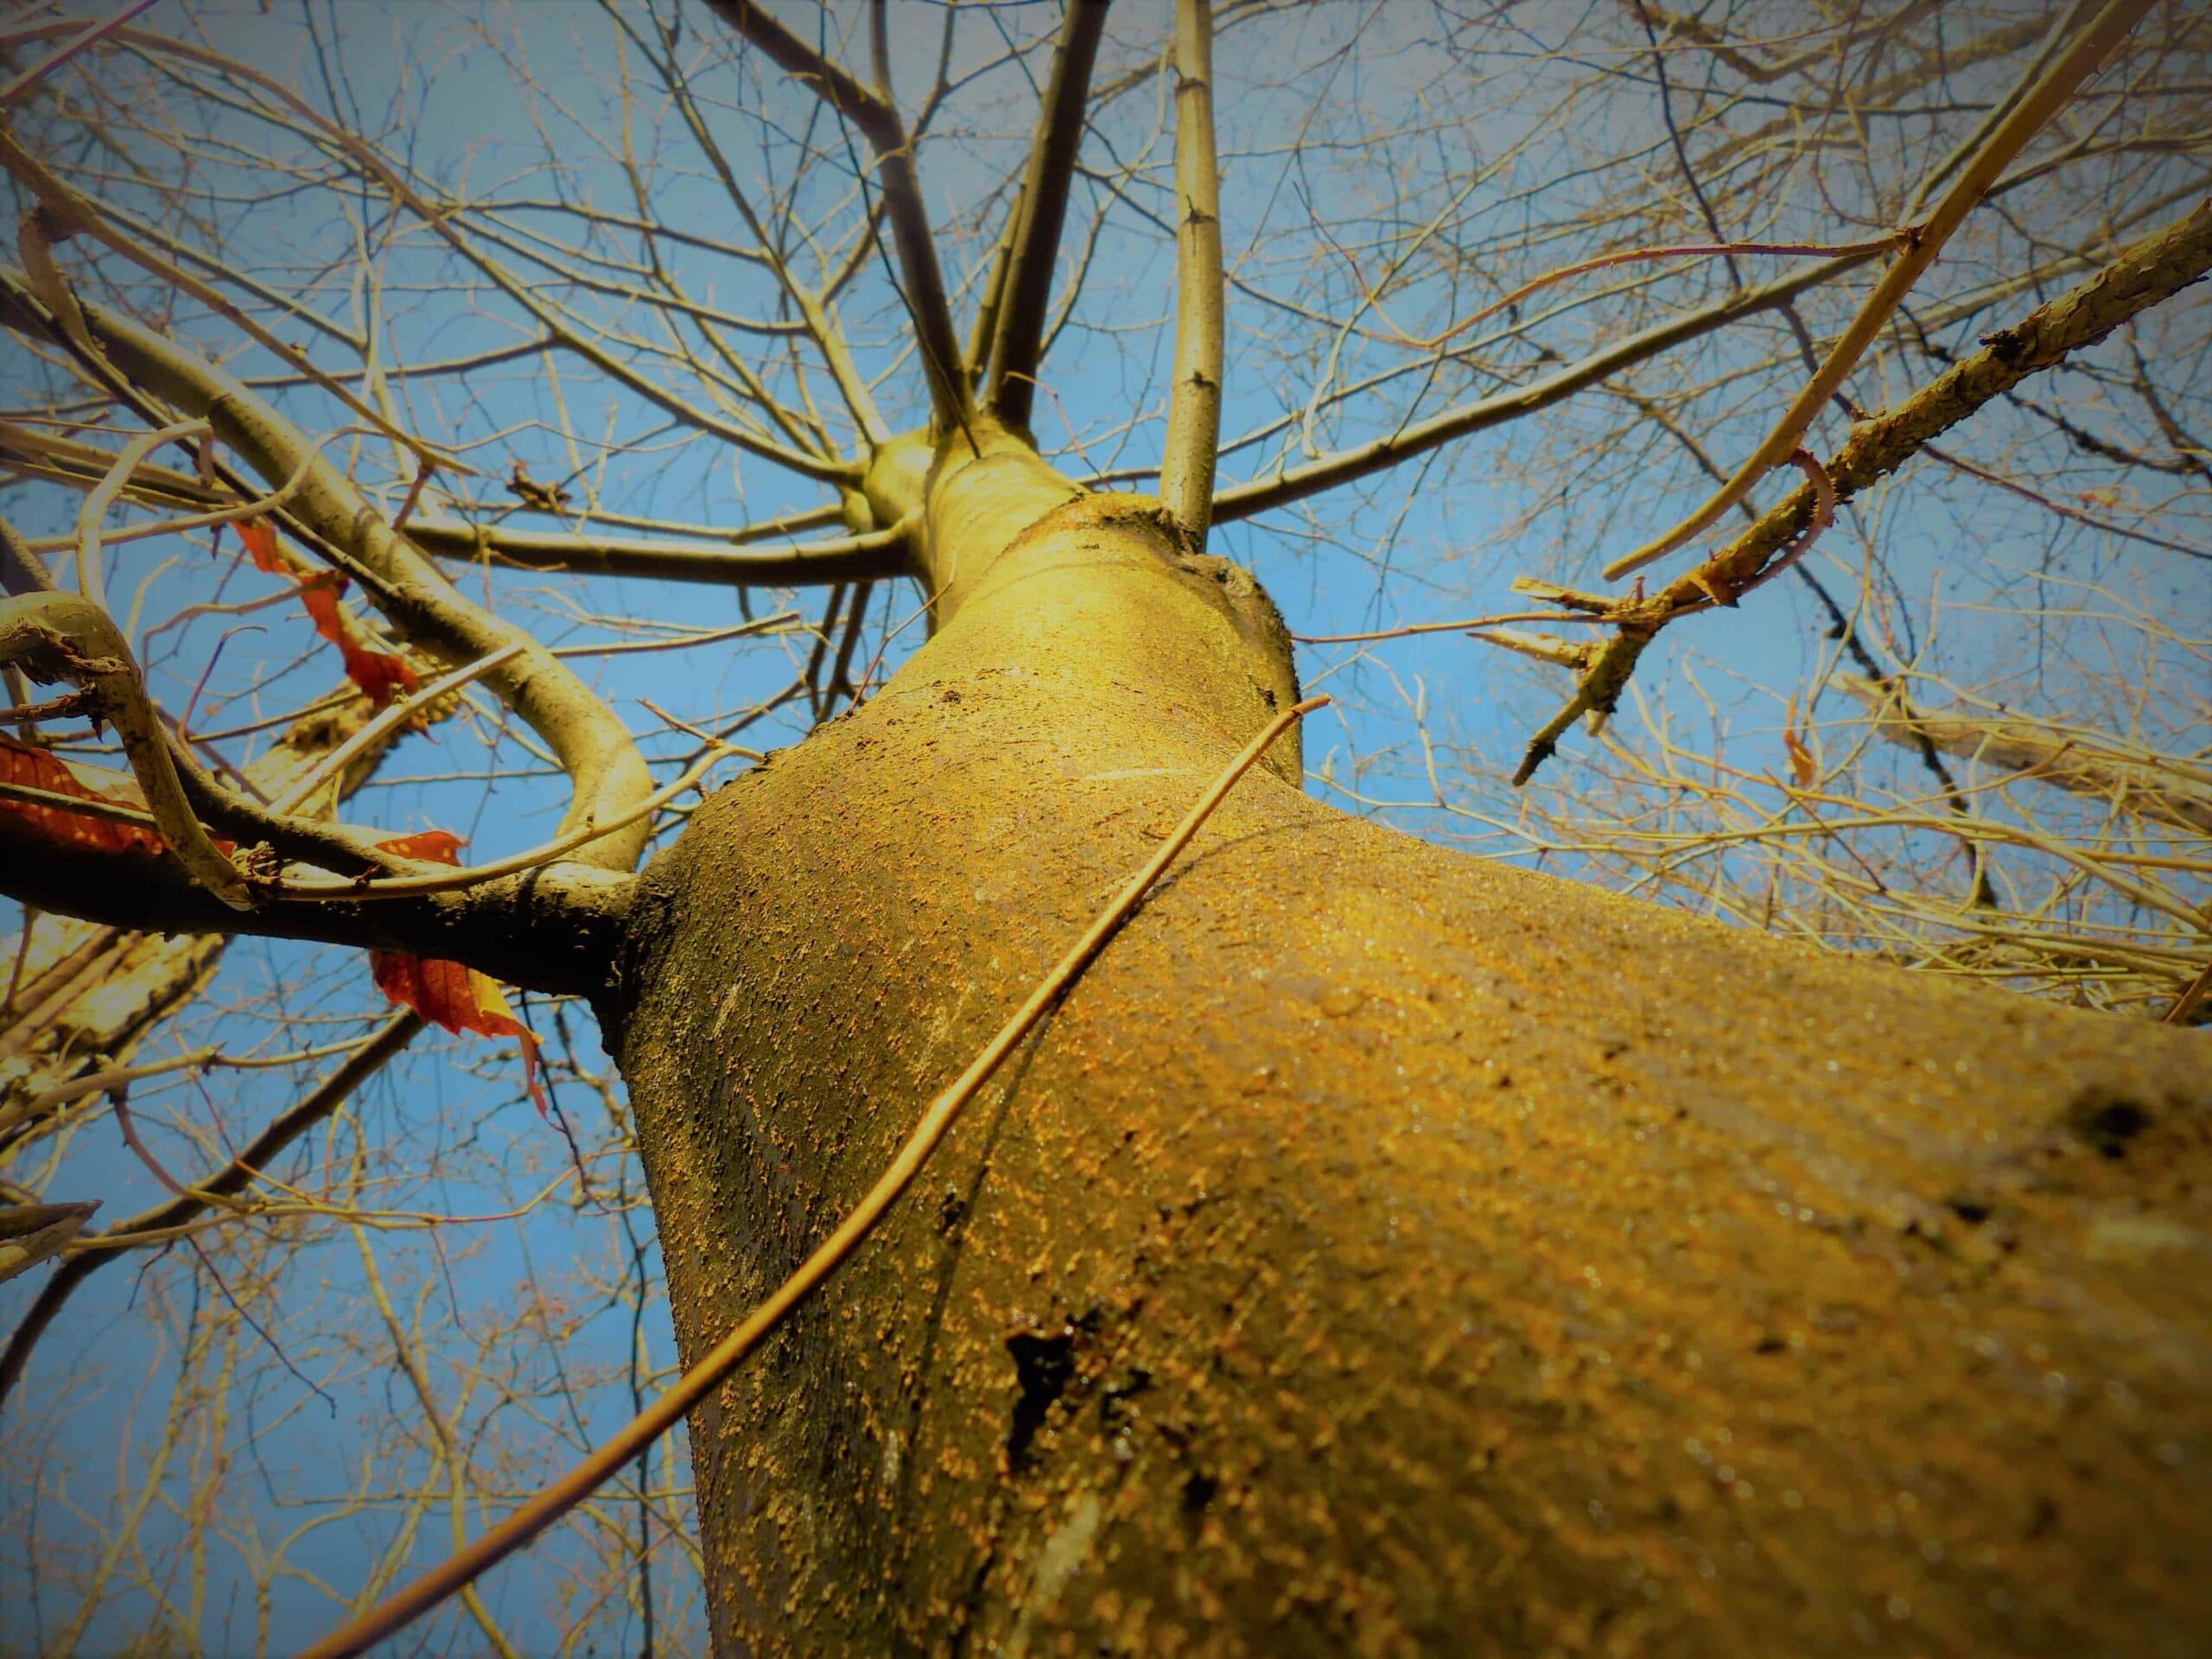 A chestnut tree at Hawthorn Farm.